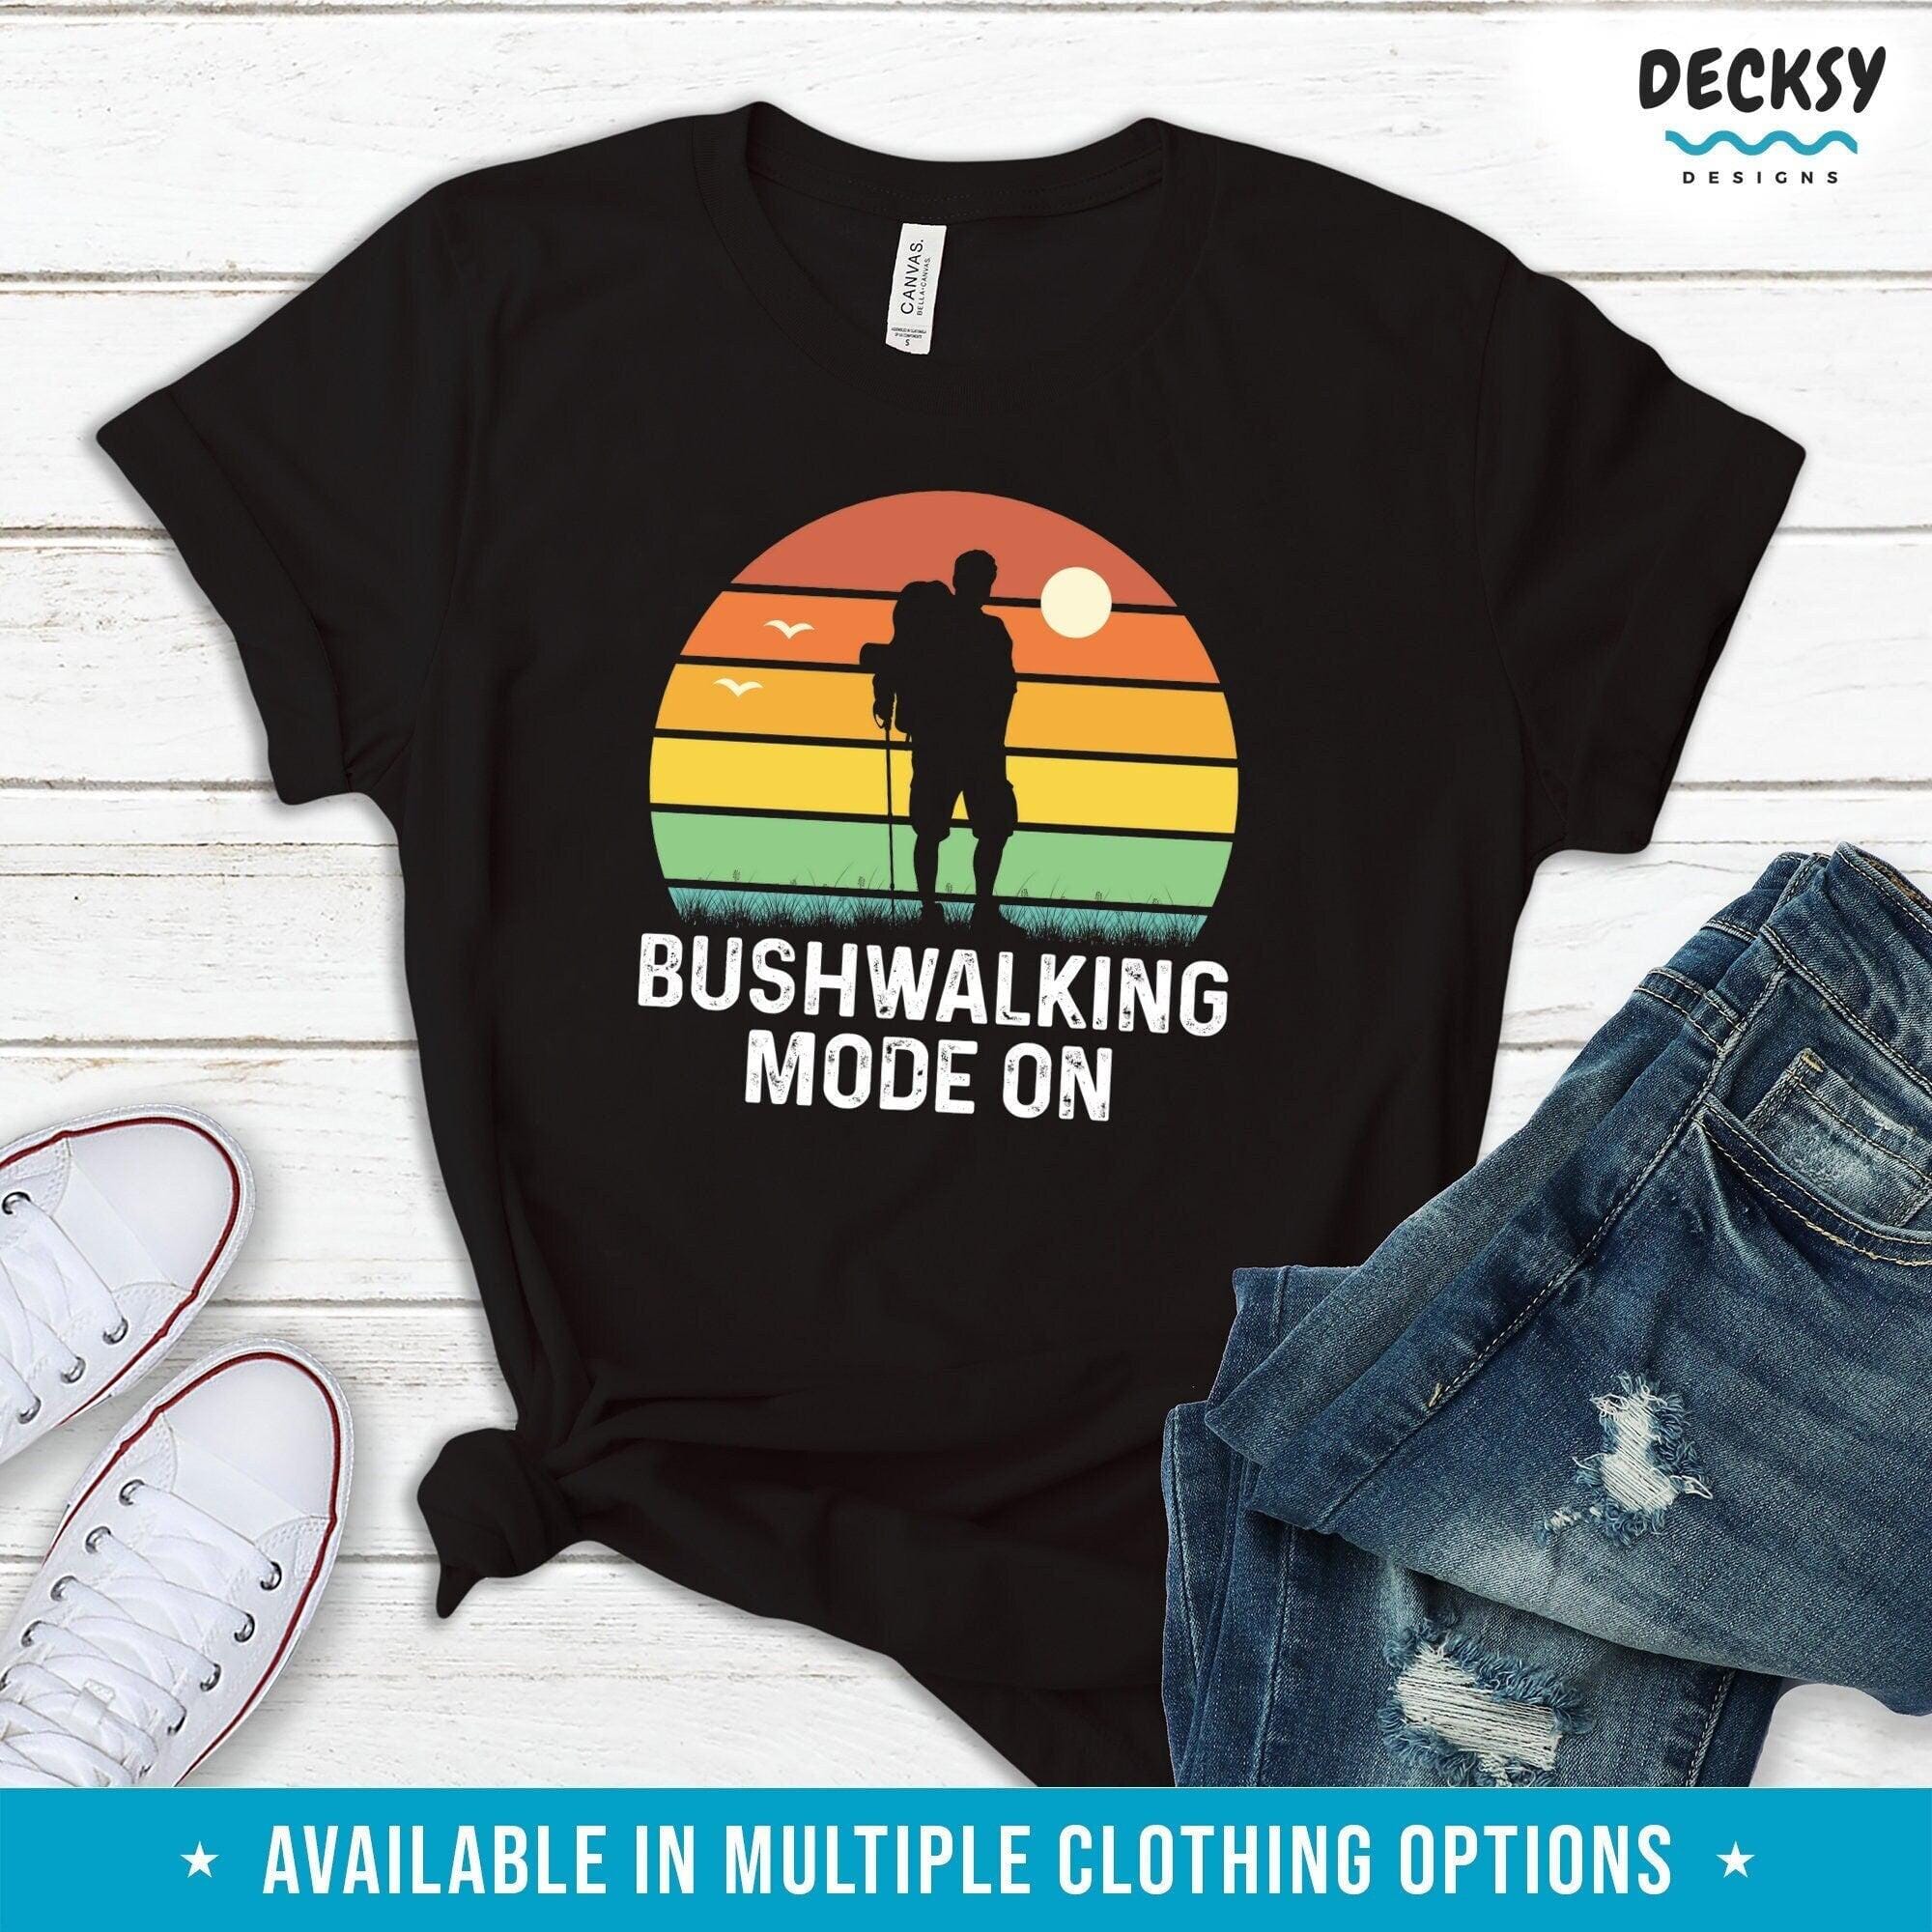 Walking T-Shirt, Hiking Gift Men-Clothing:Gender-Neutral Adult Clothing:Tops & Tees:T-shirts:Graphic Tees-DecksyDesigns